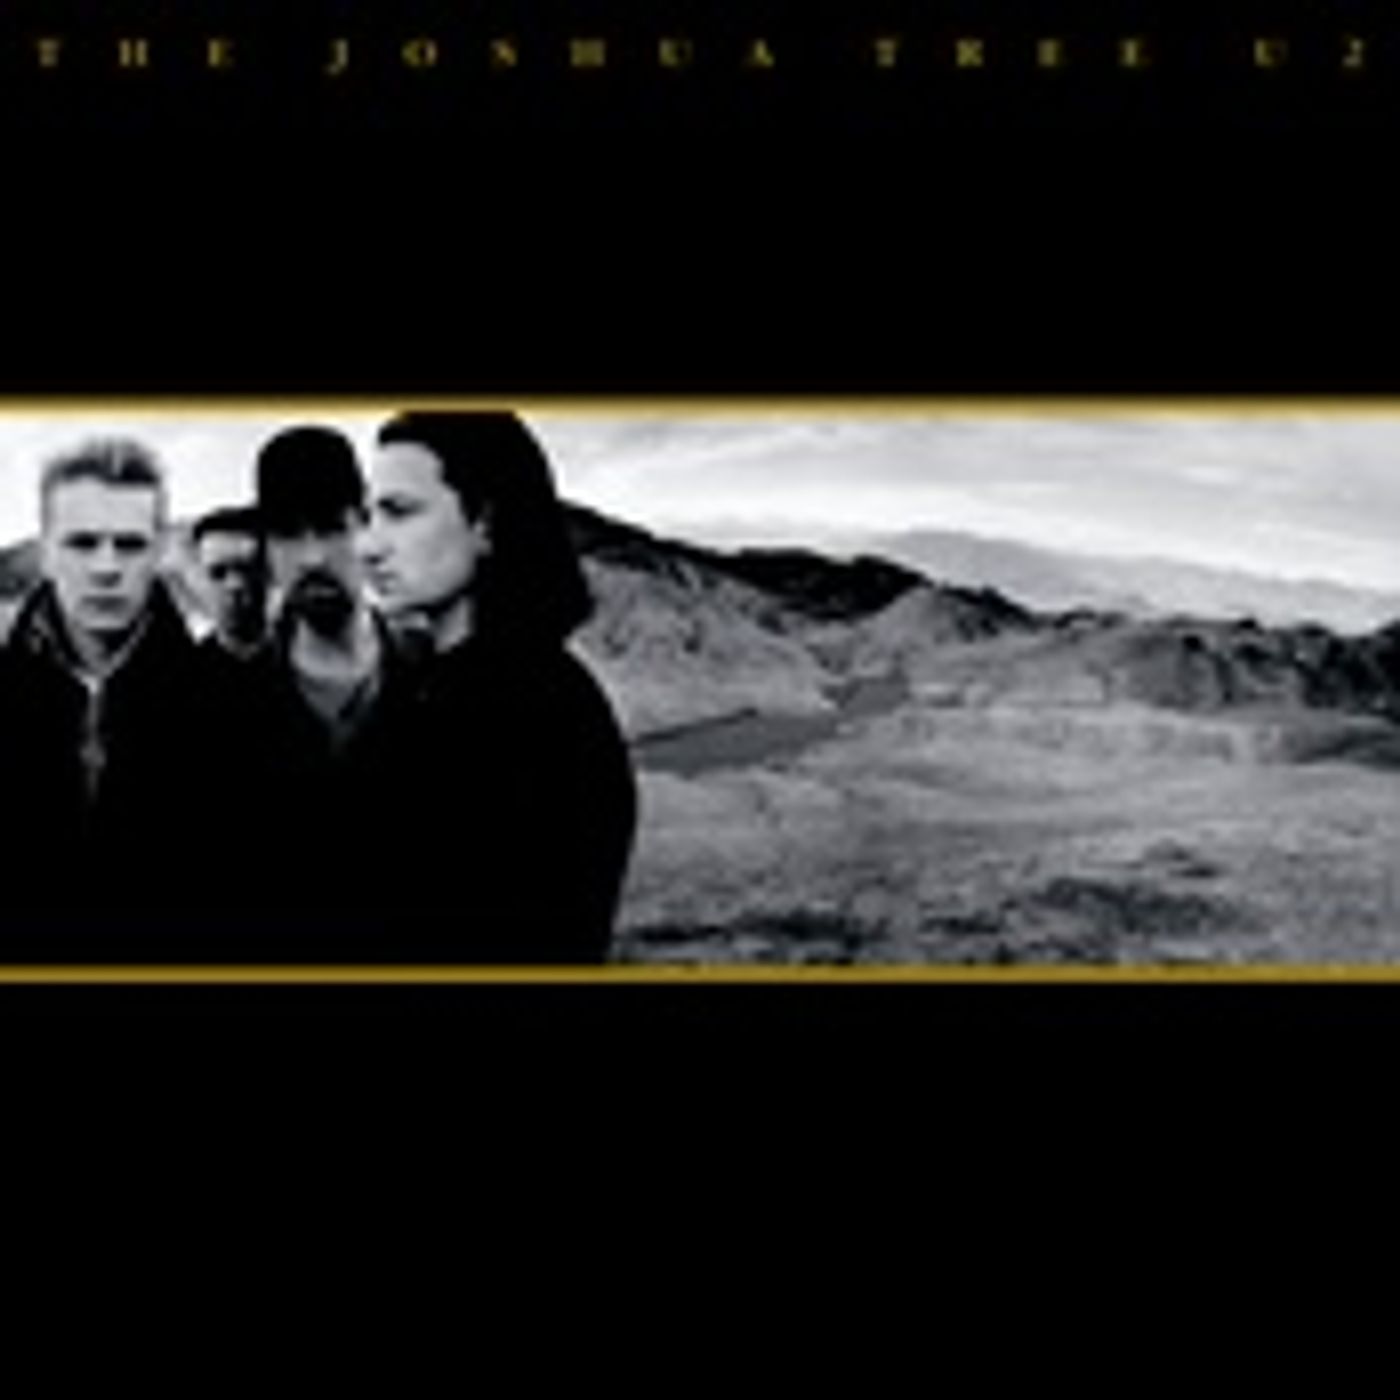 U2 The Joshua Tree